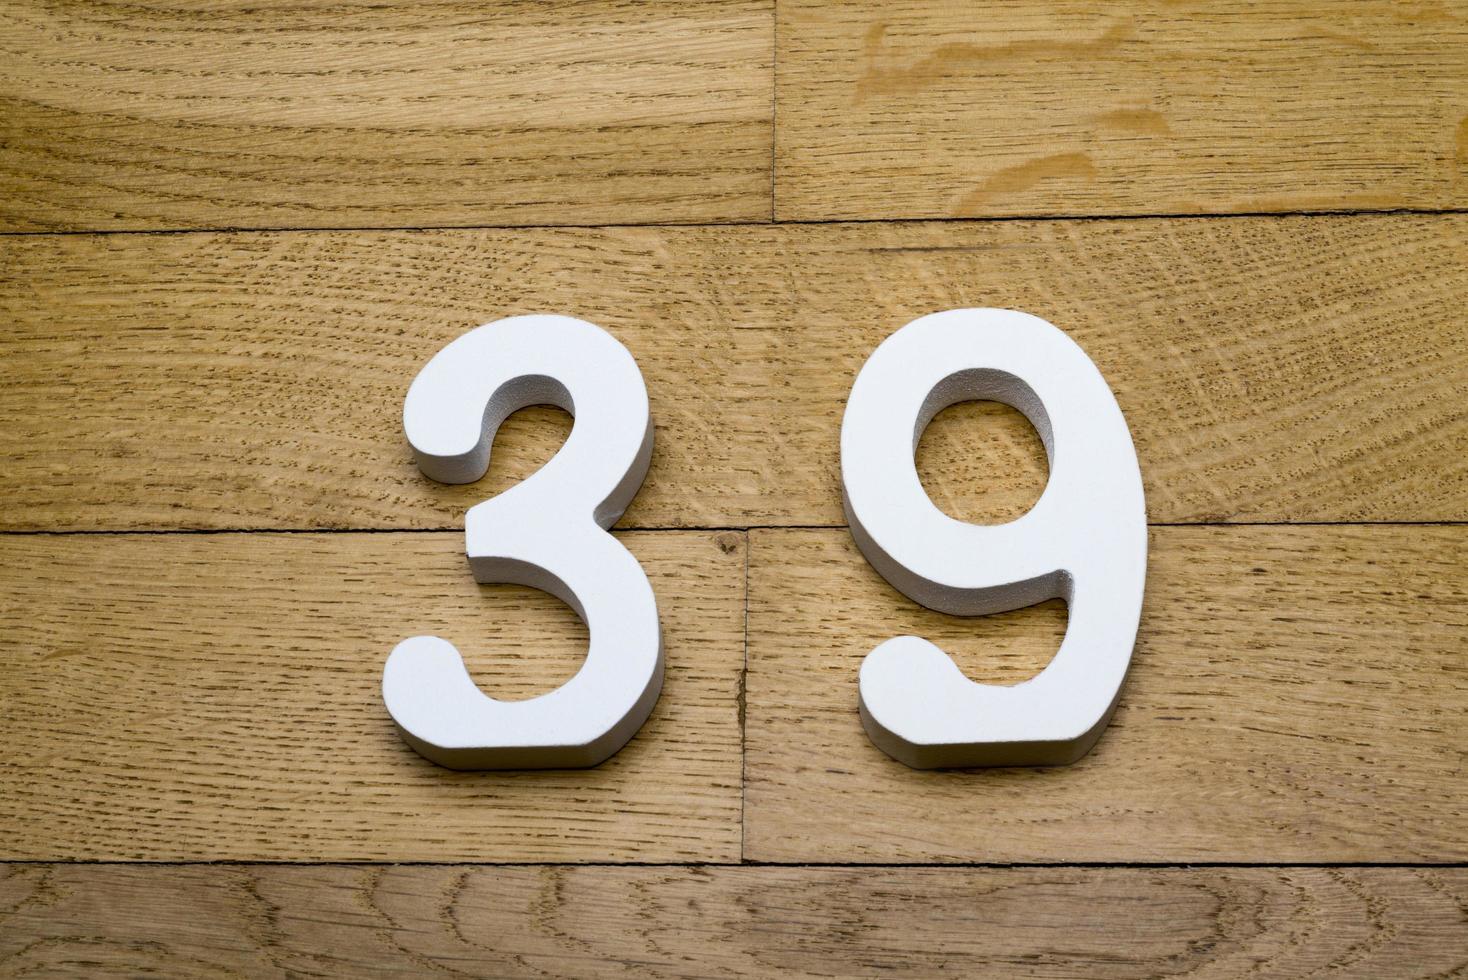 Figure thirty-nine on the wooden, parquet floor. photo